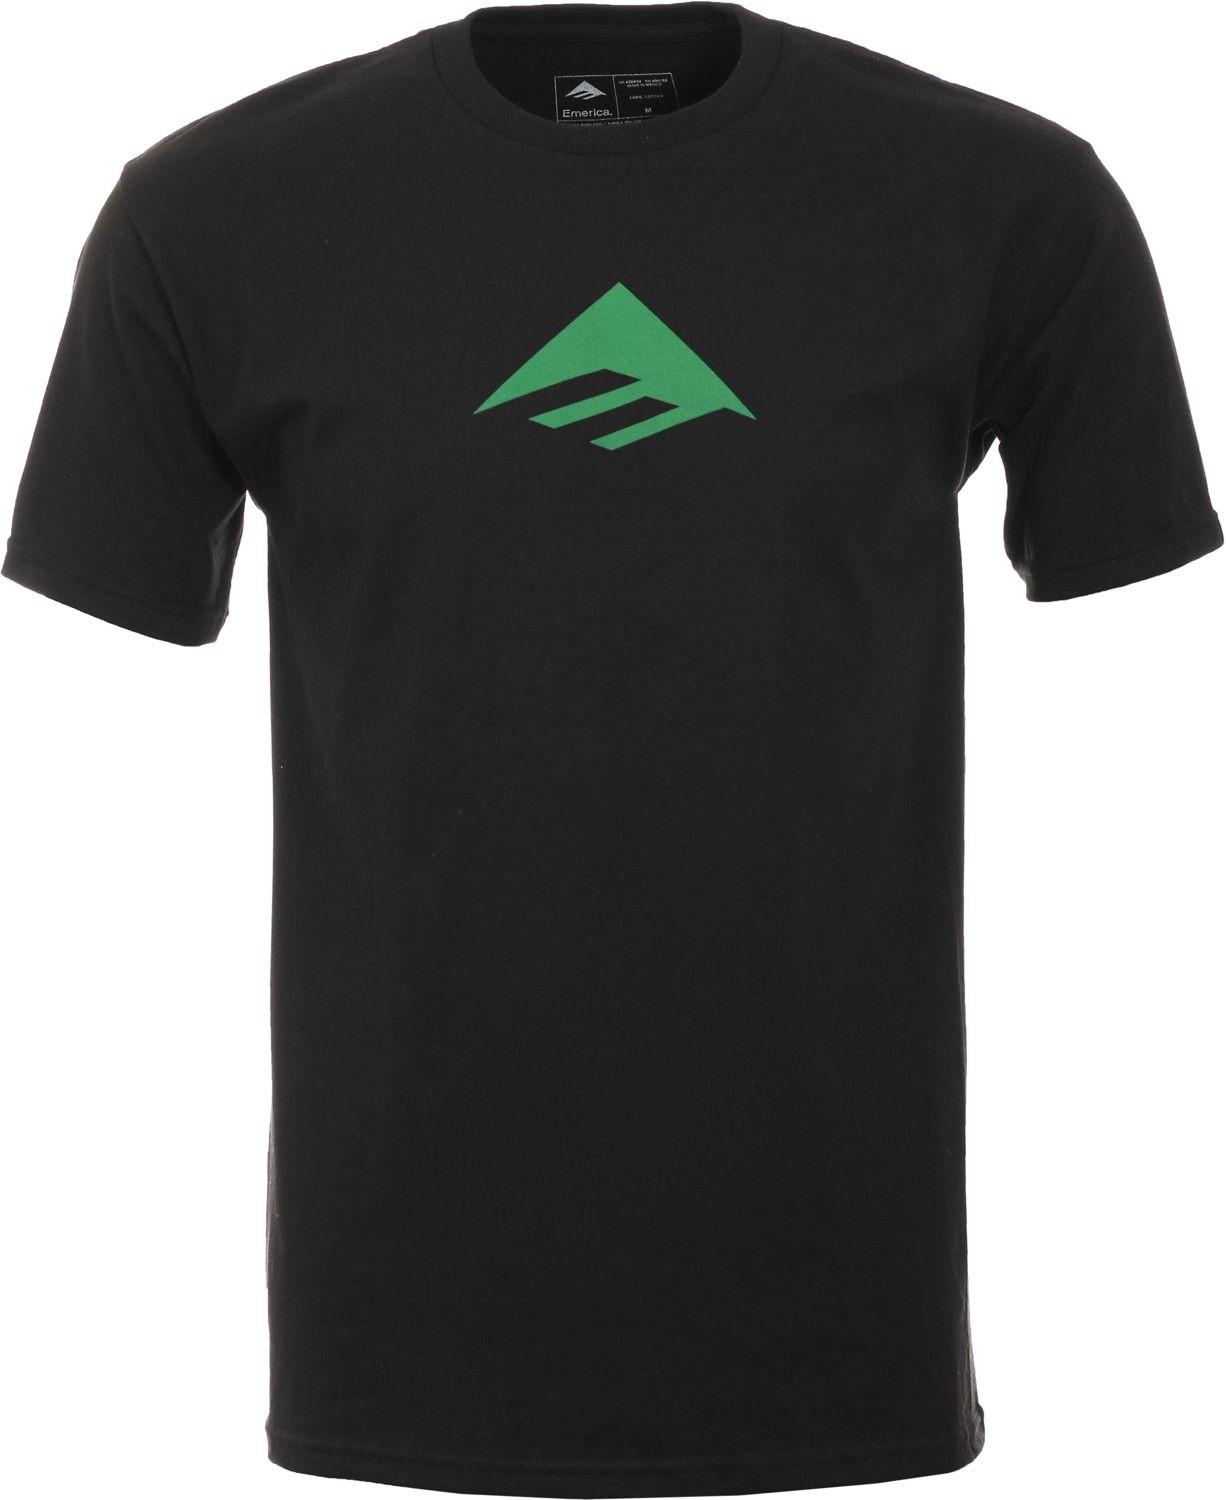 Green Triangle Clothing Logo - Emerica Men Clothing: Emerica Emerica Triangle T-Shirt with Black ...